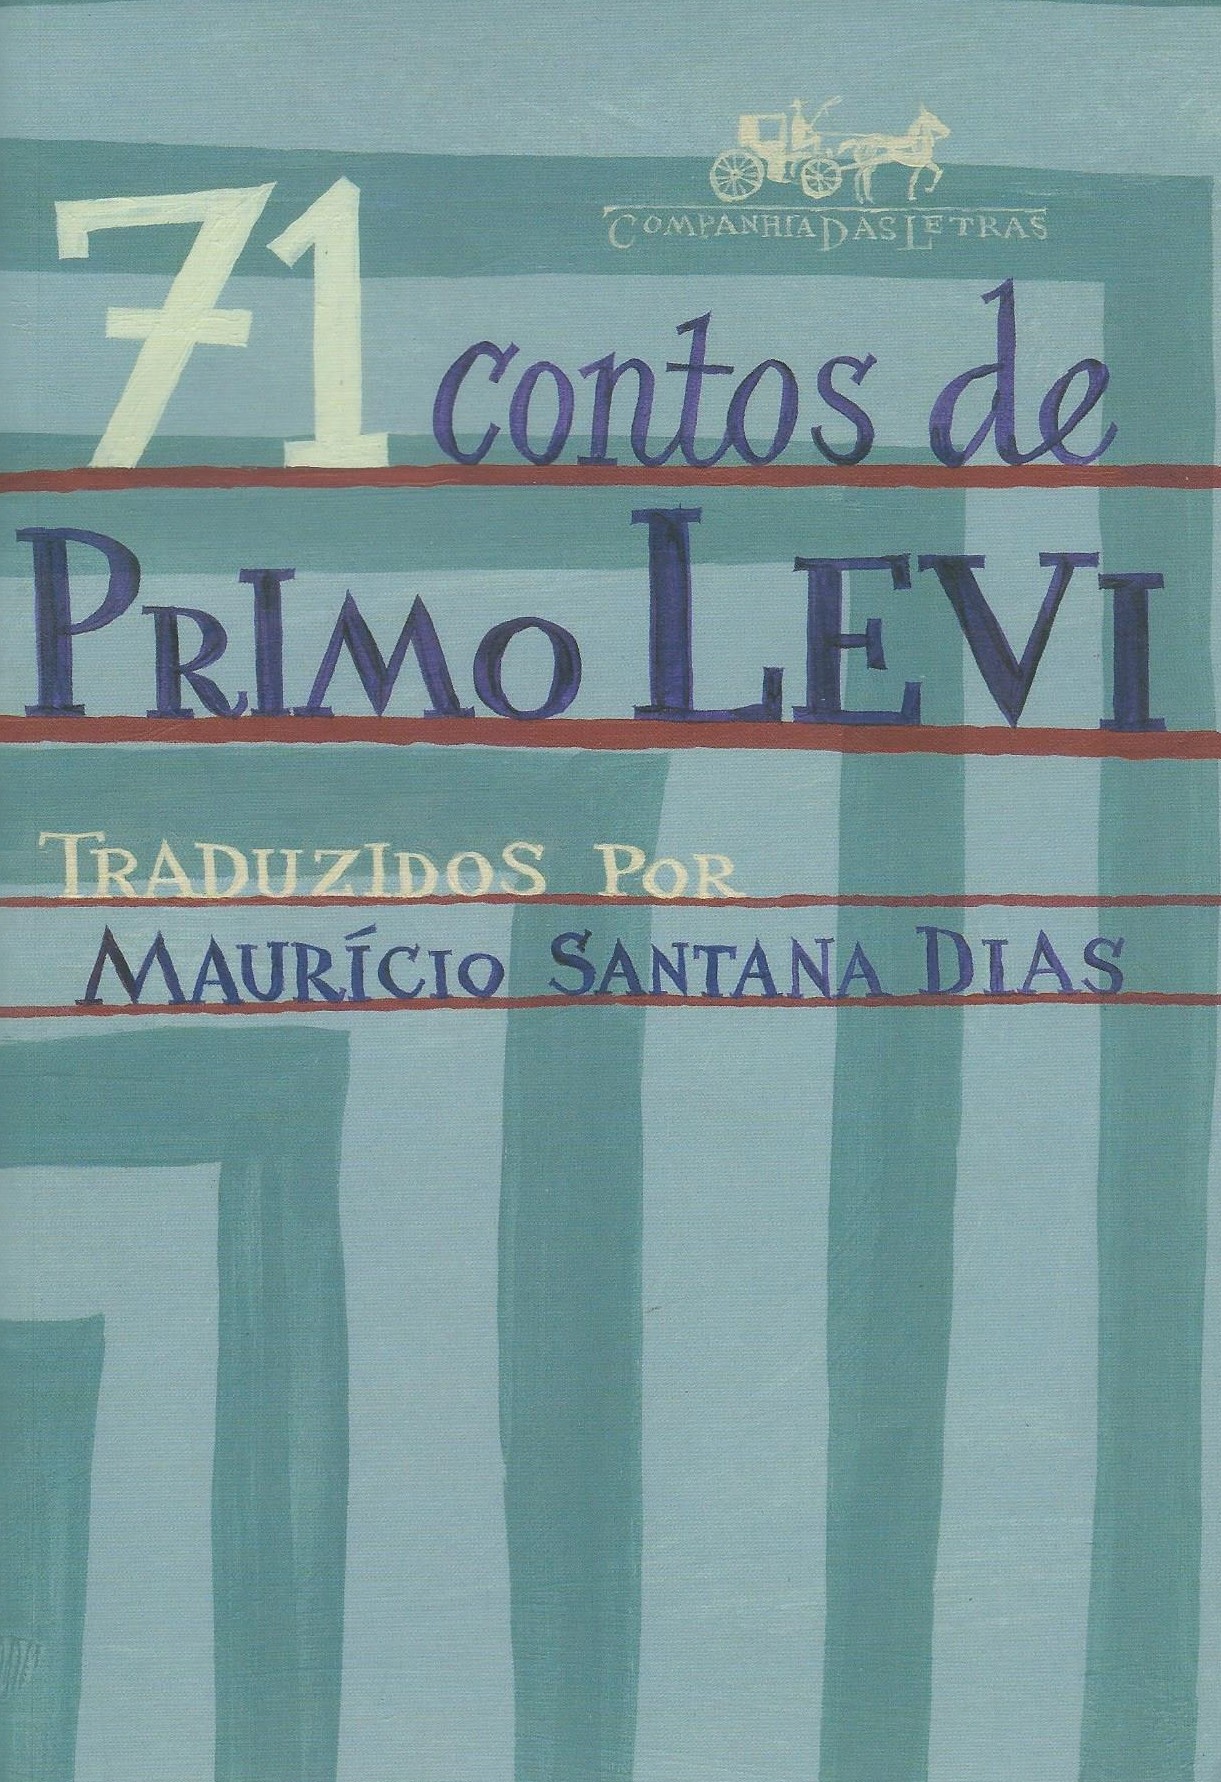 https://www.literaturabrasileira.ufsc.br/_images/obras/71_contos_de_primo_levi_2005_ok.jpg